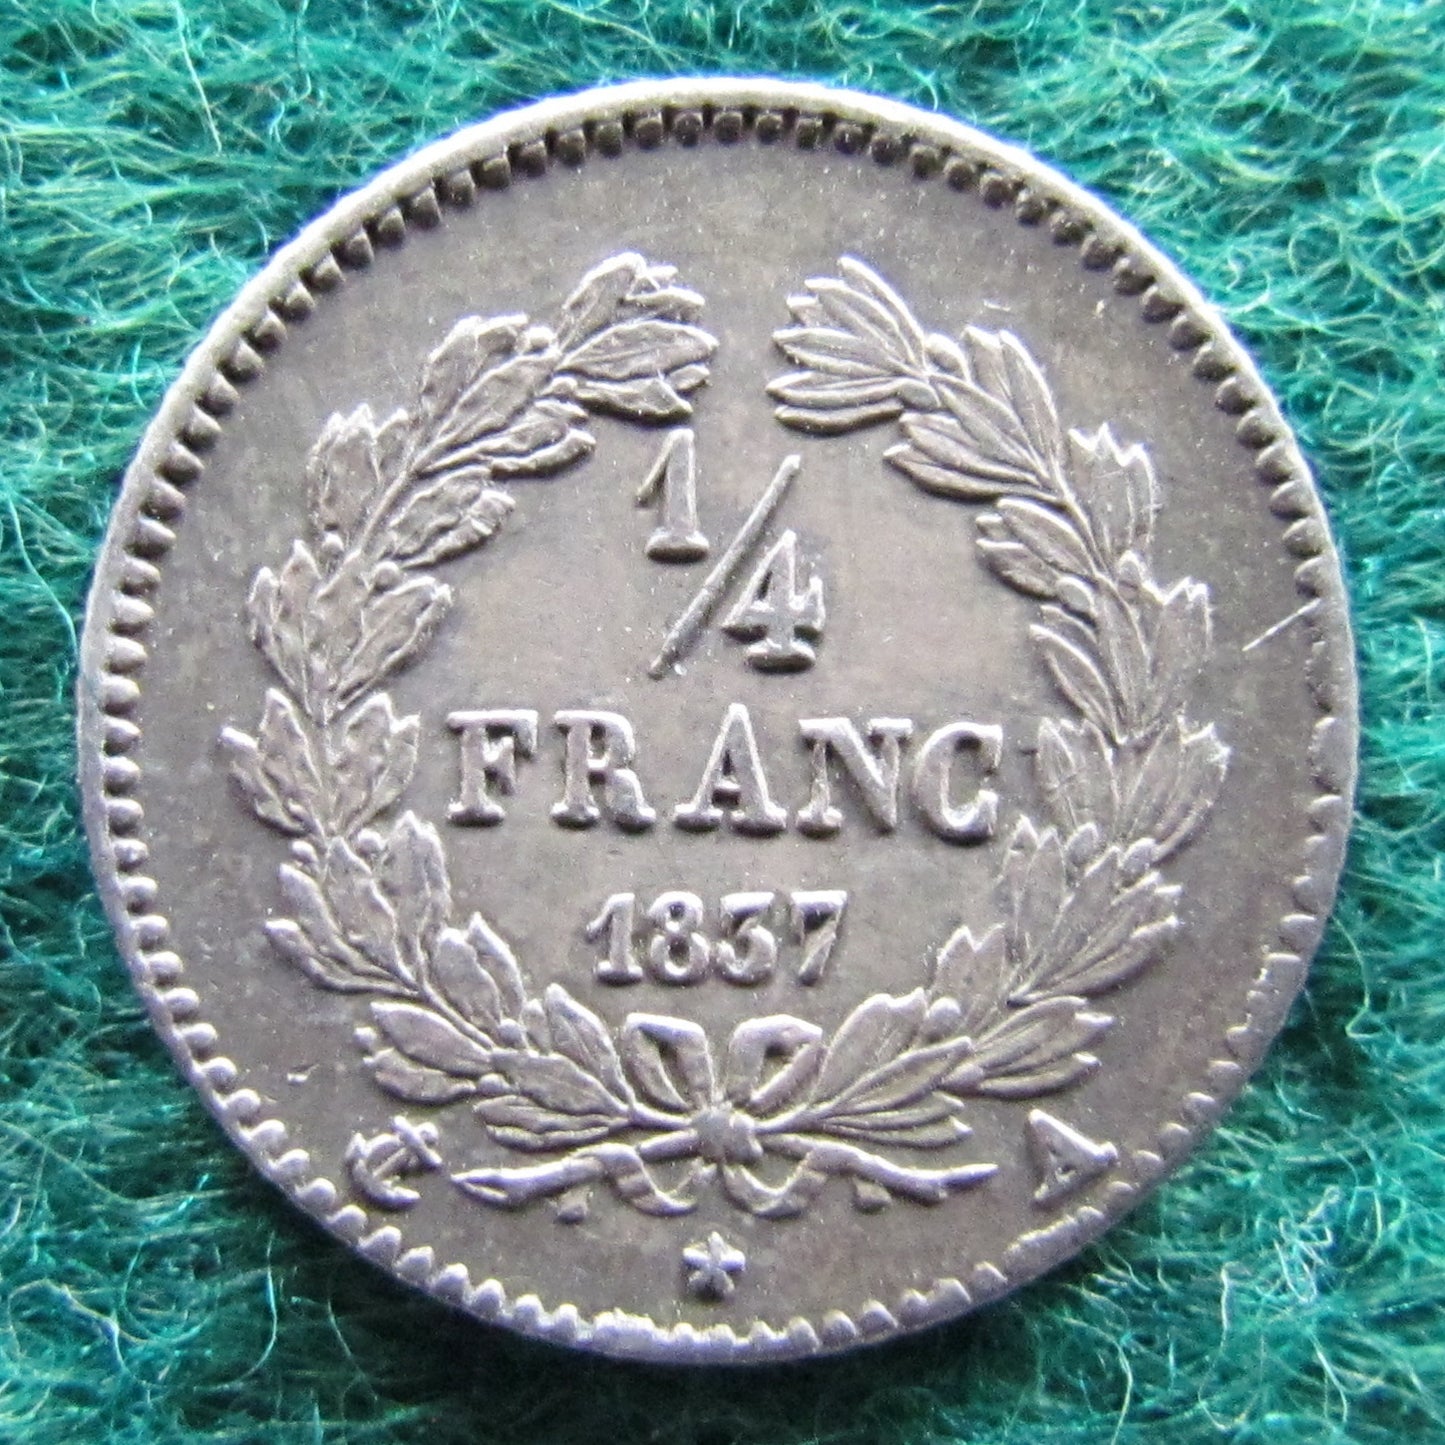 French 1837 1/4 Franc Coin Quarter Franc Coin